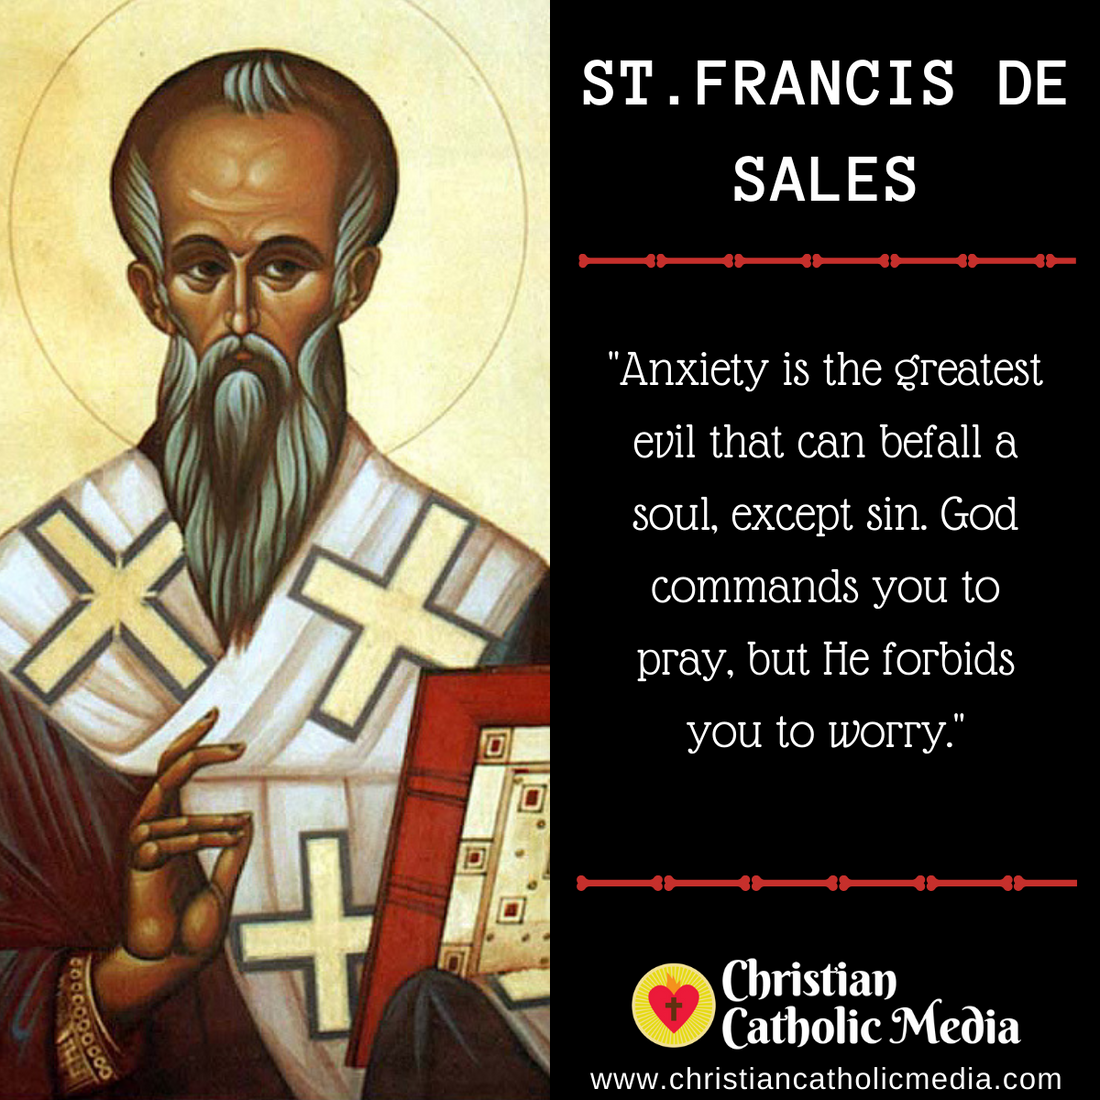 St. Francis de Sales - Friday January 24, 2020